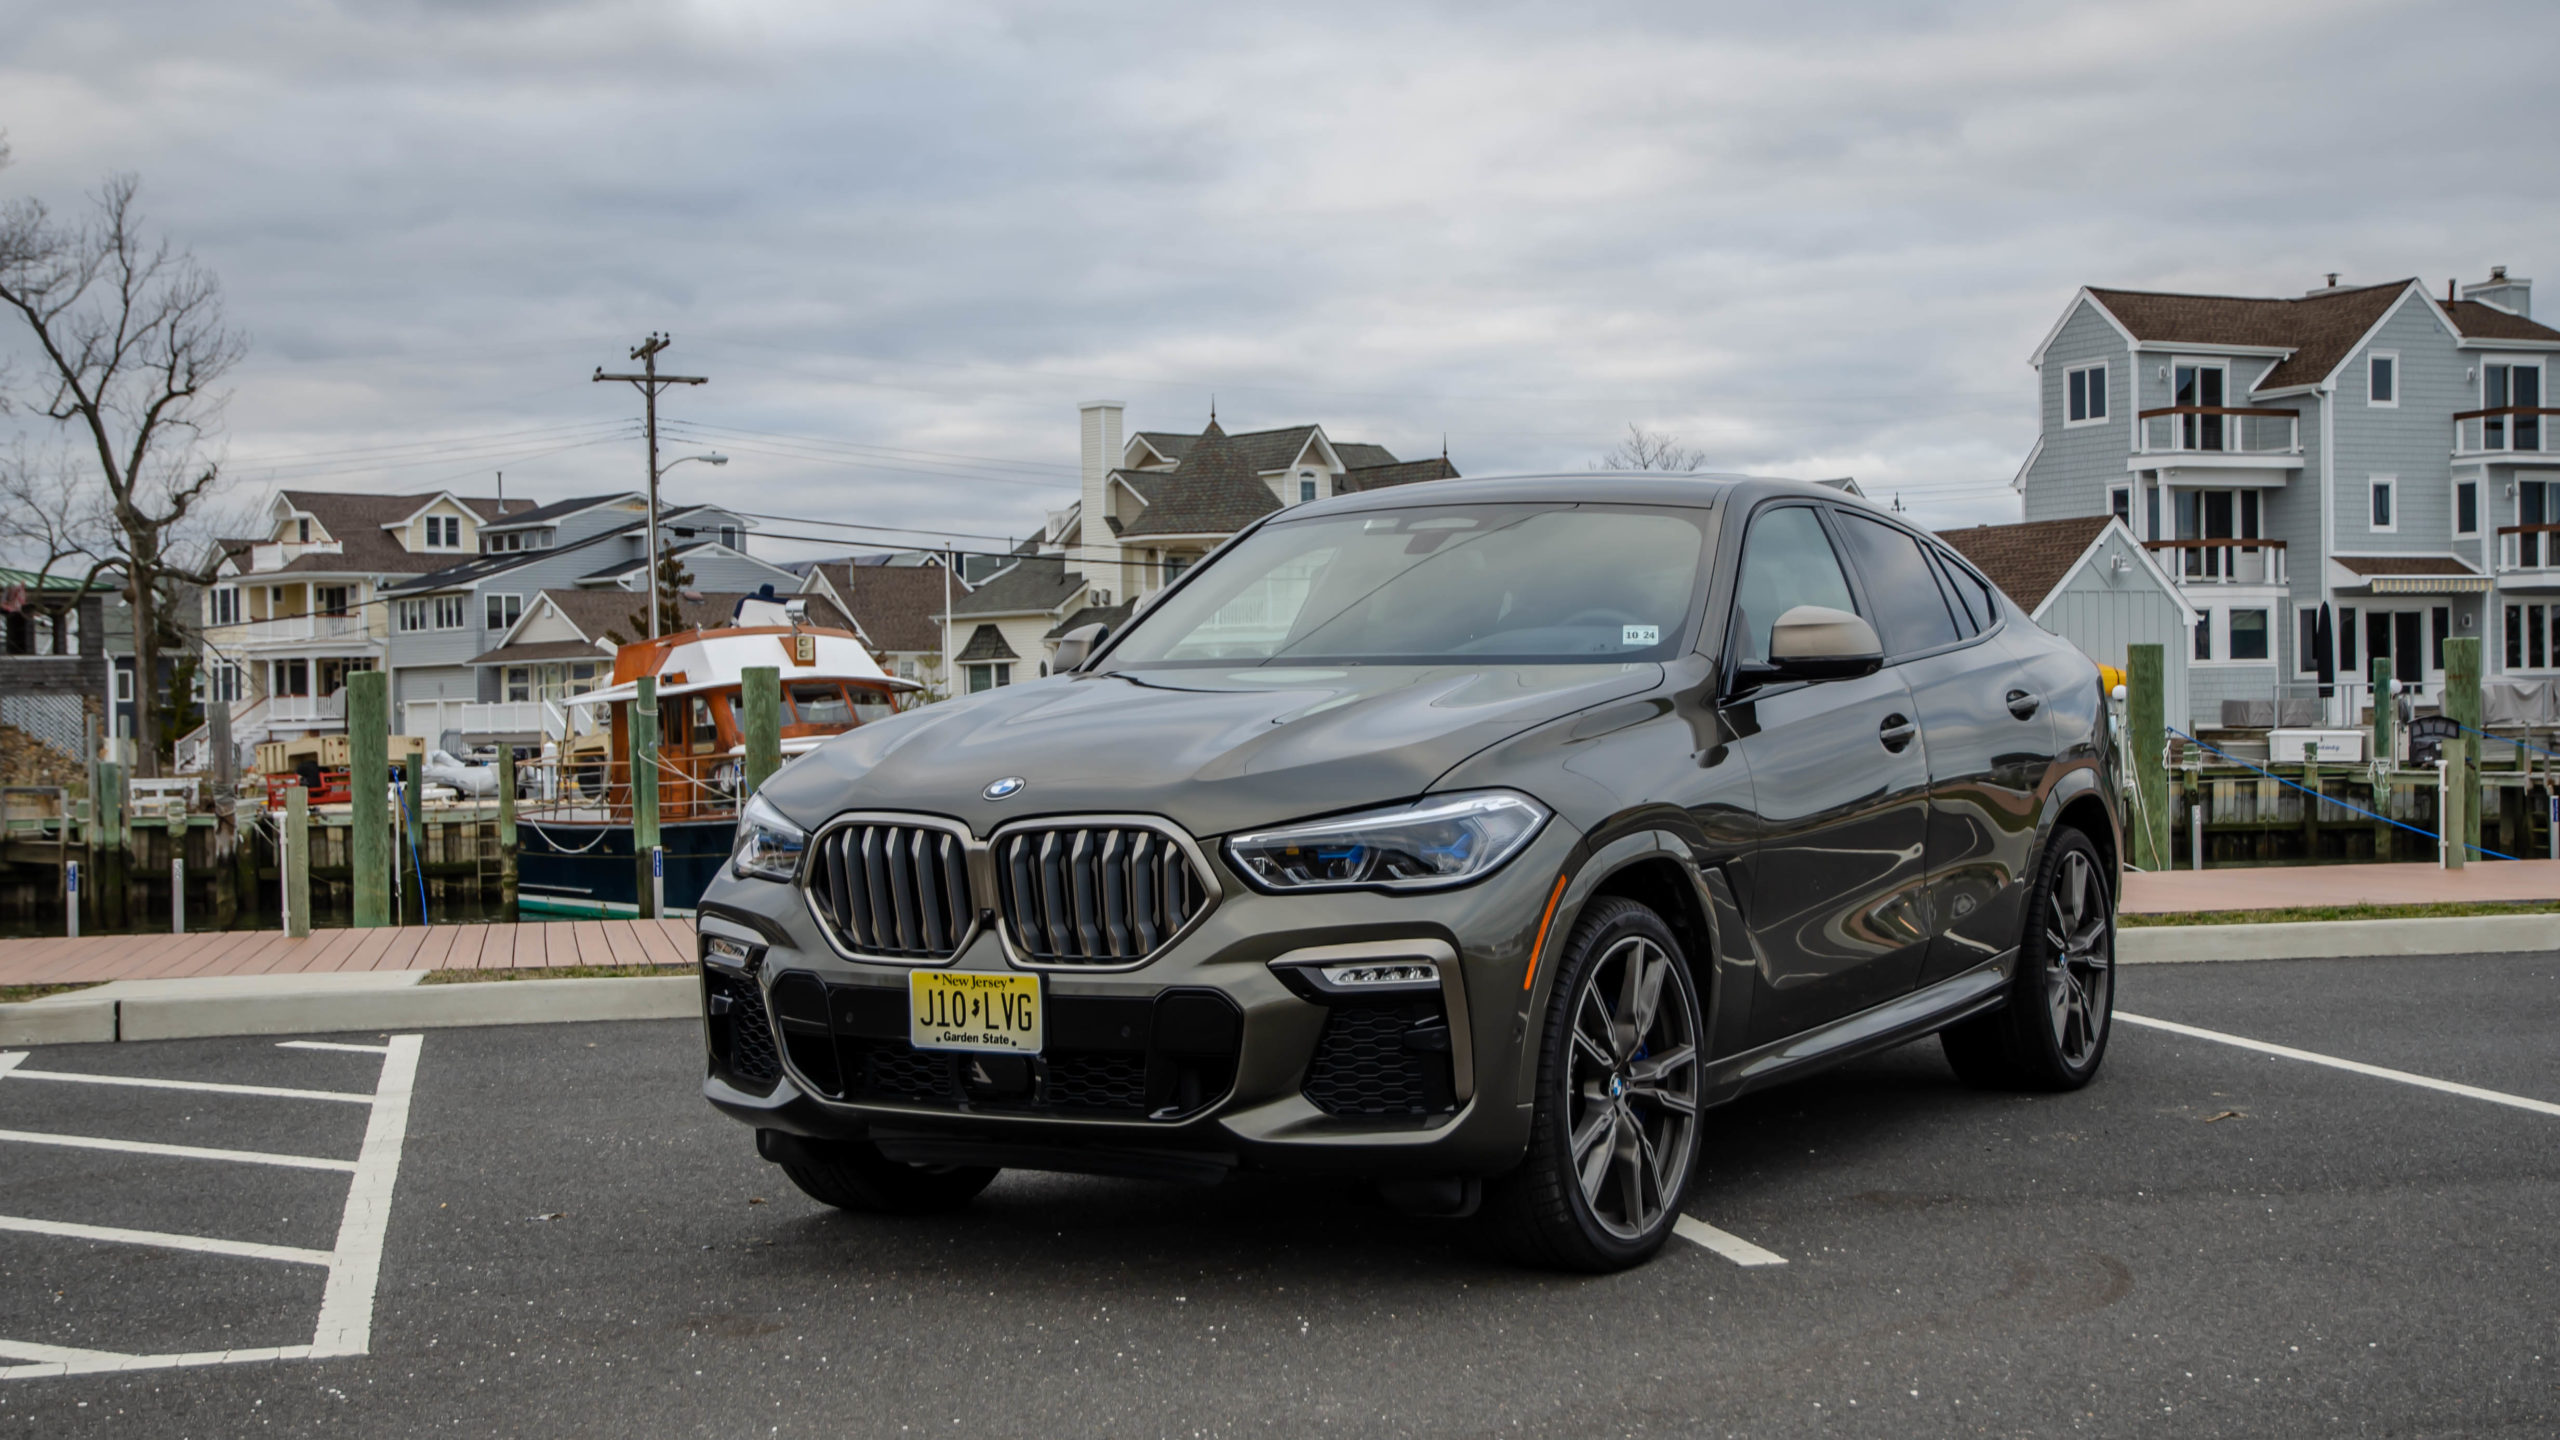 TEST DRIVE: 2020 BMW X6 M50i -- Style Doesn't Need to Make Sense